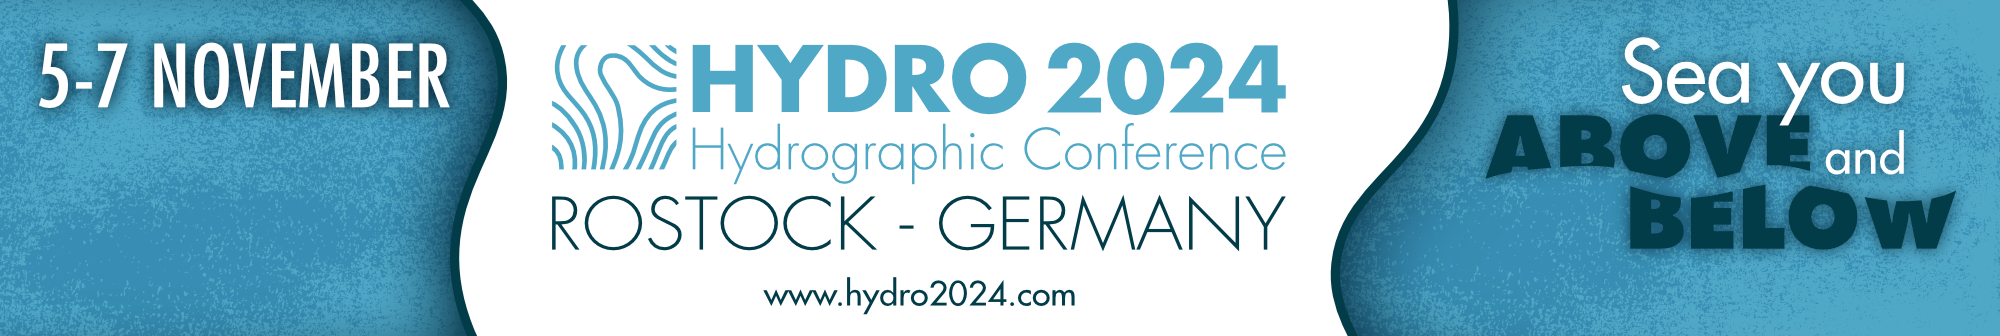 Hydro2024 Banner